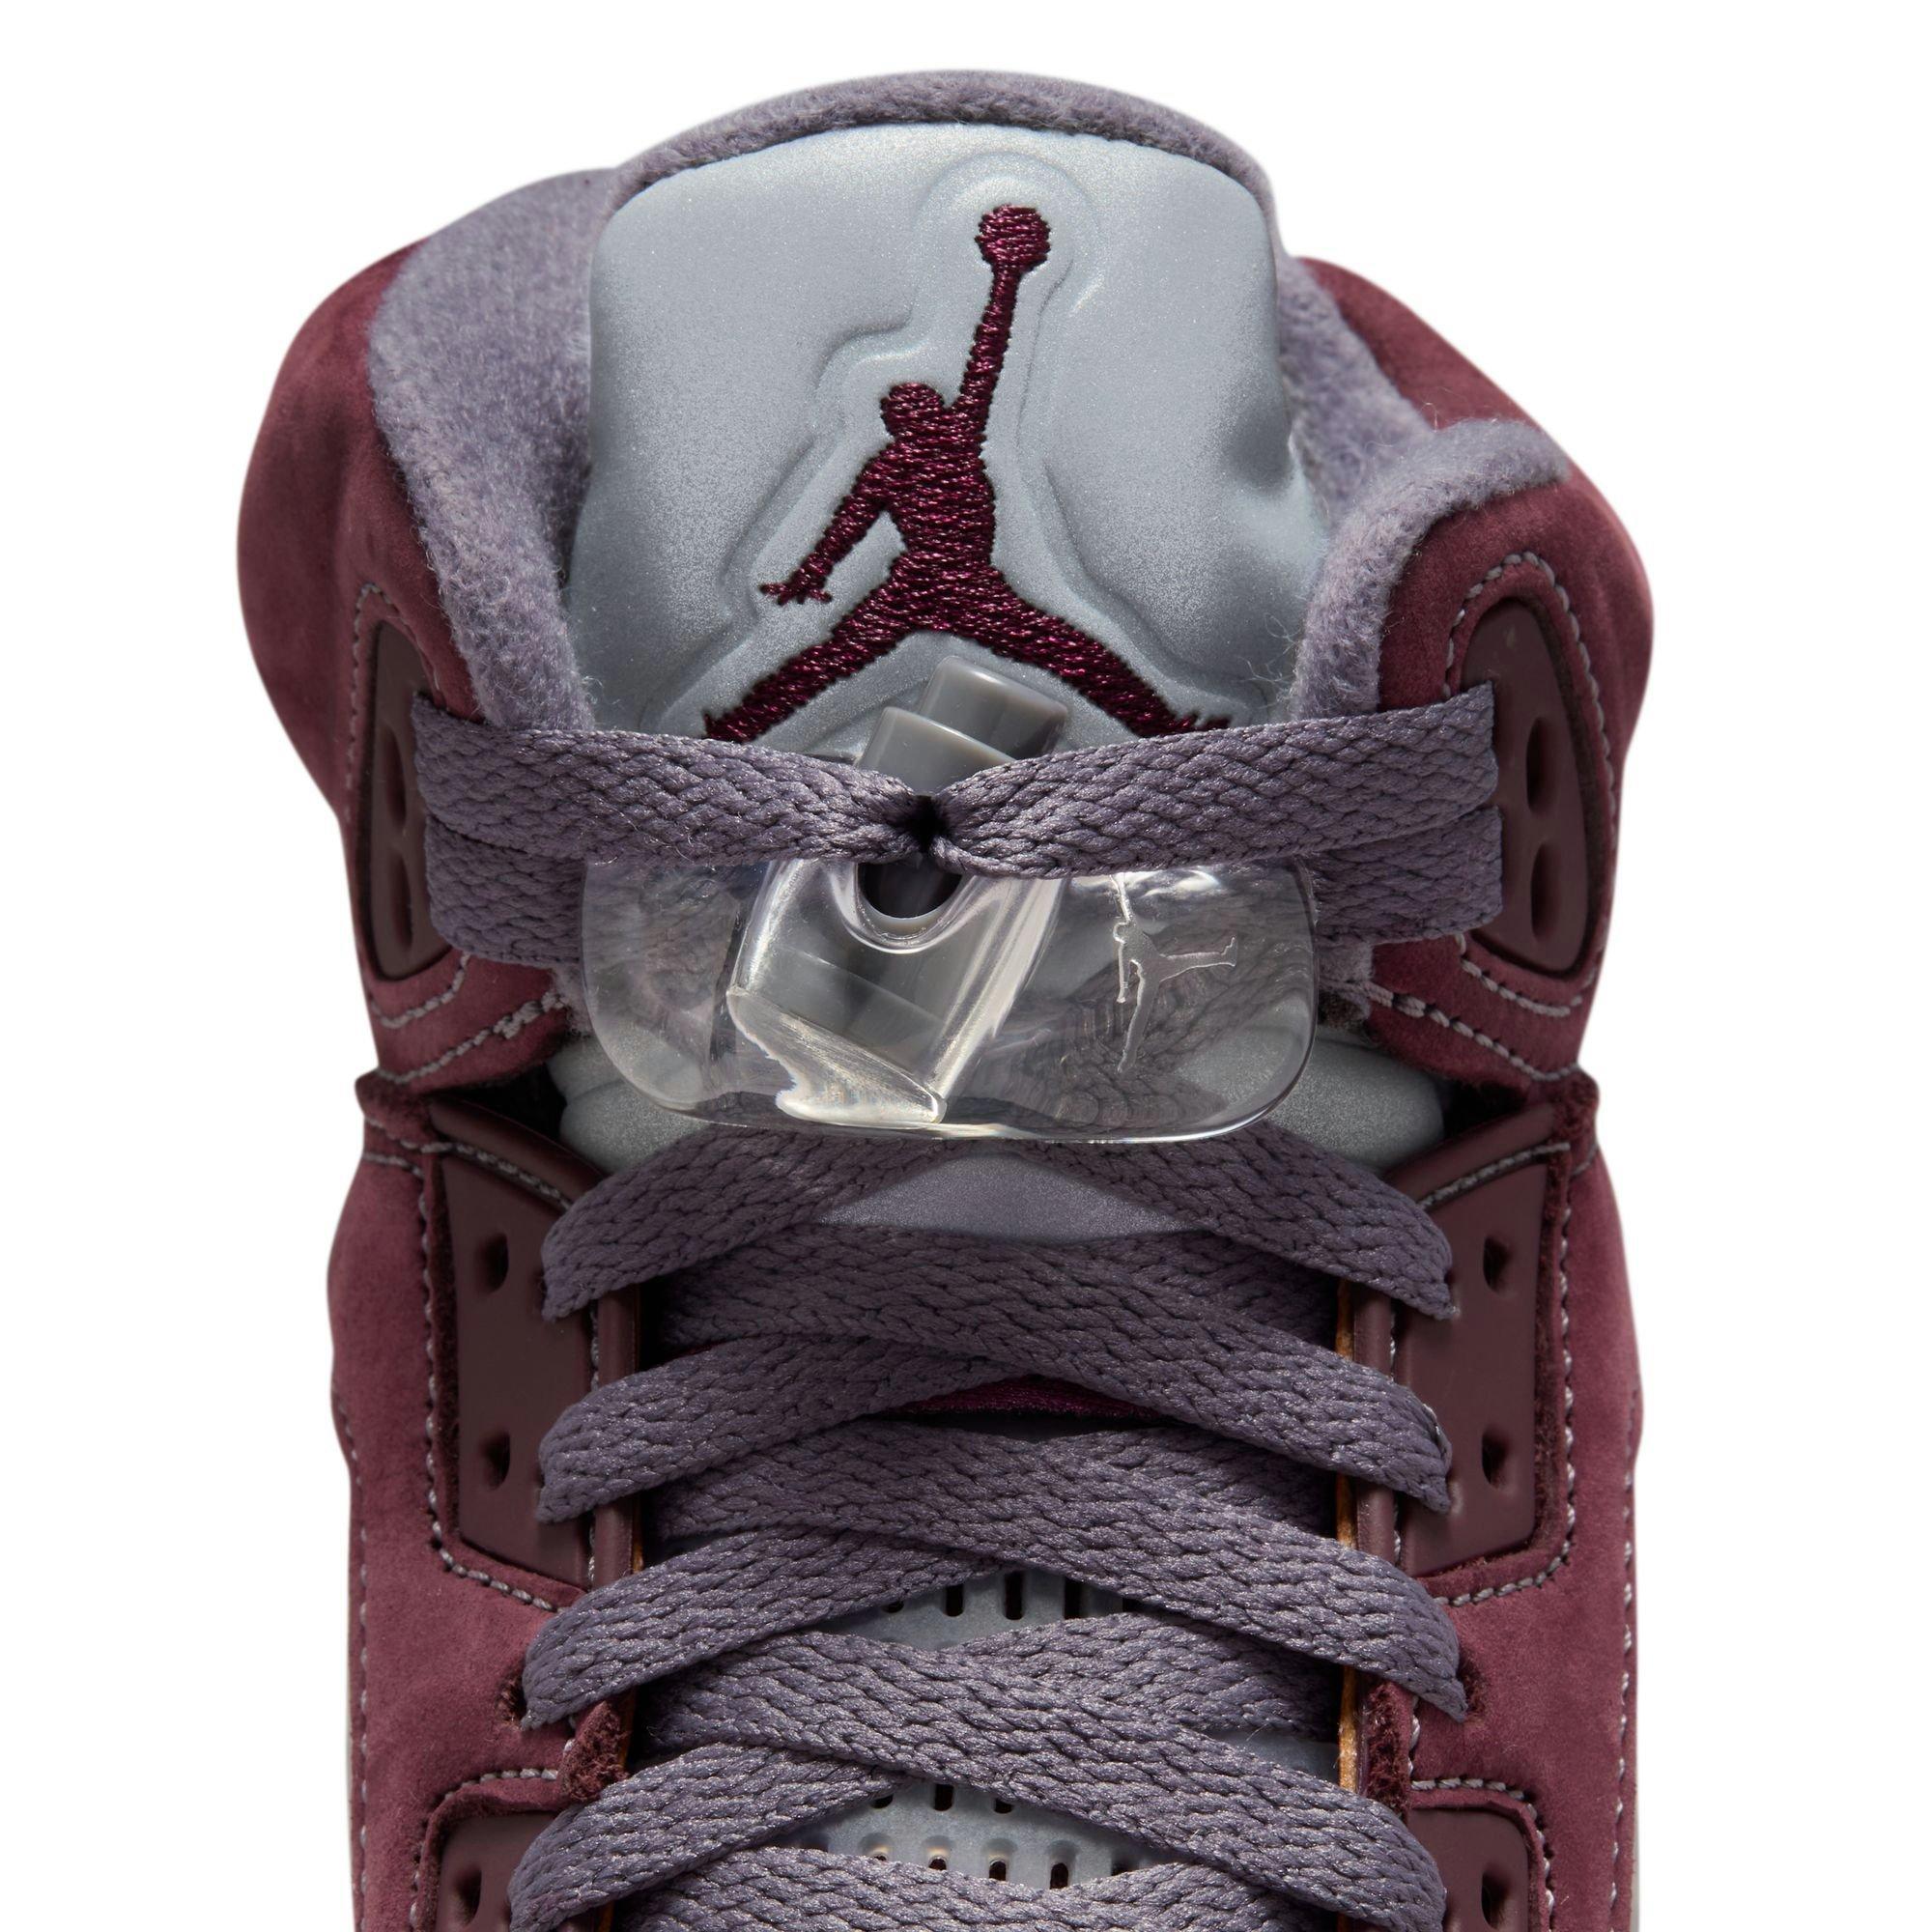 burgundy basketball sneakers